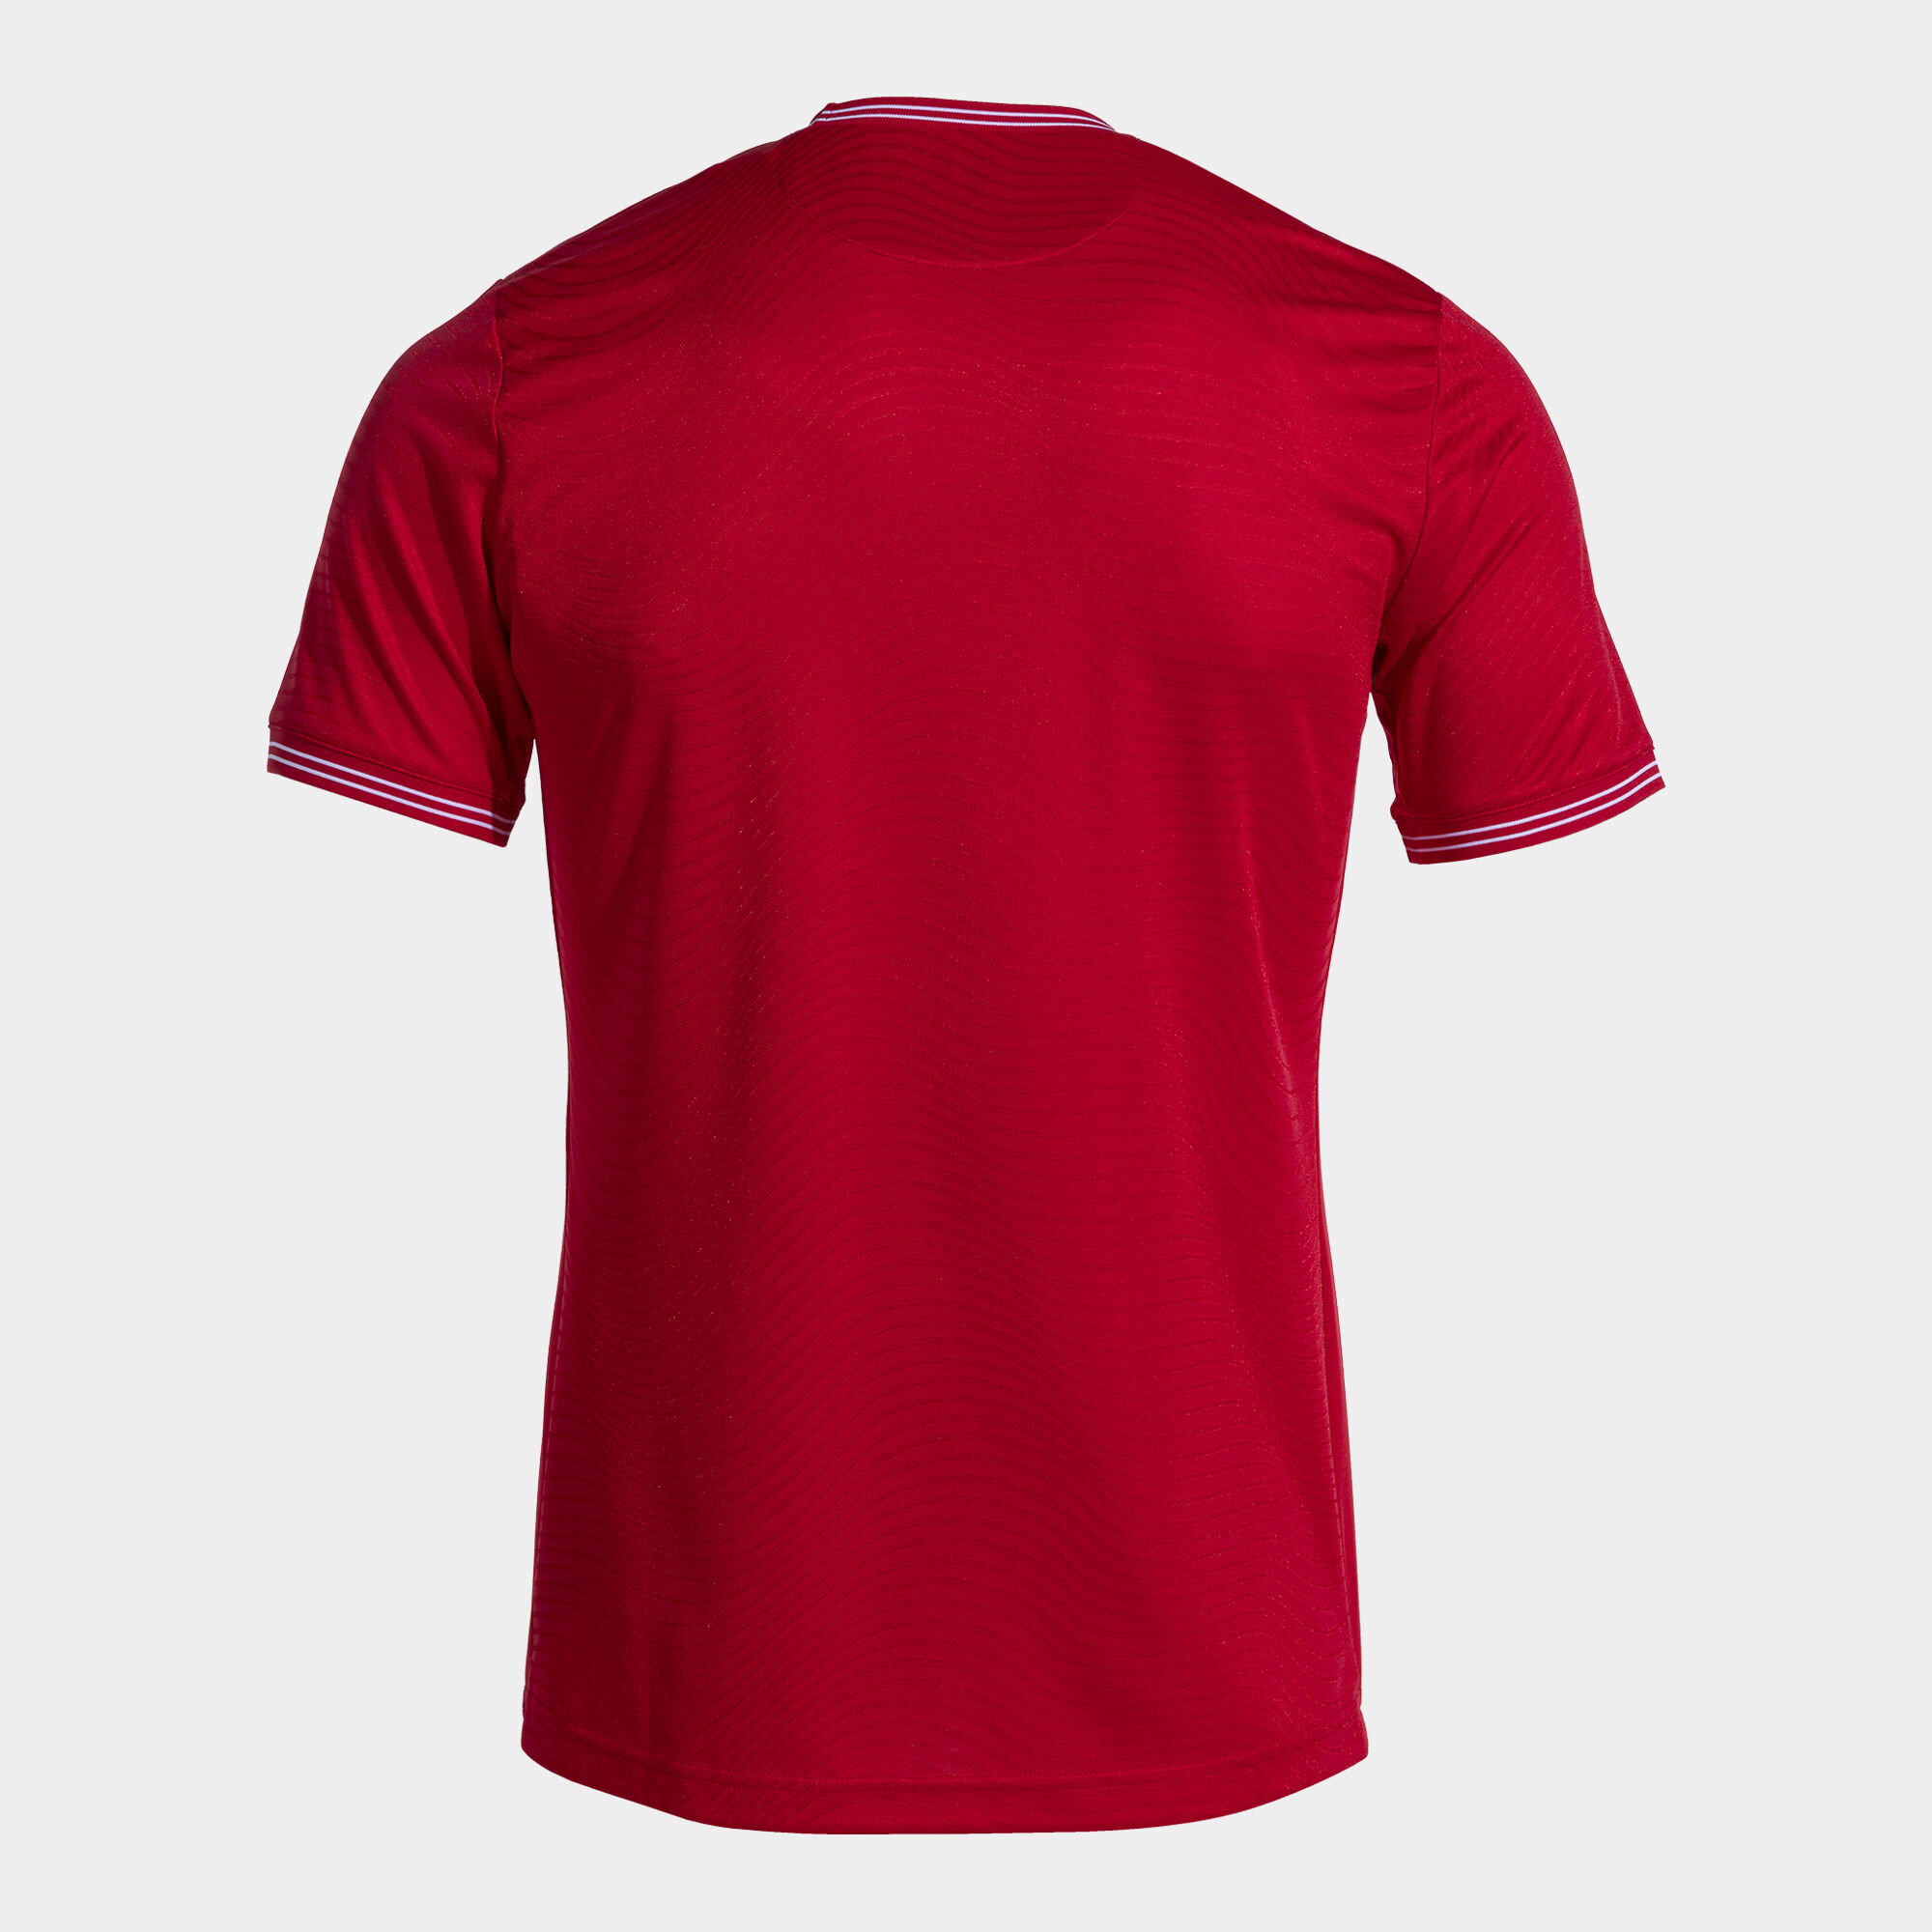 Shirt short sleeve man Toletum V red